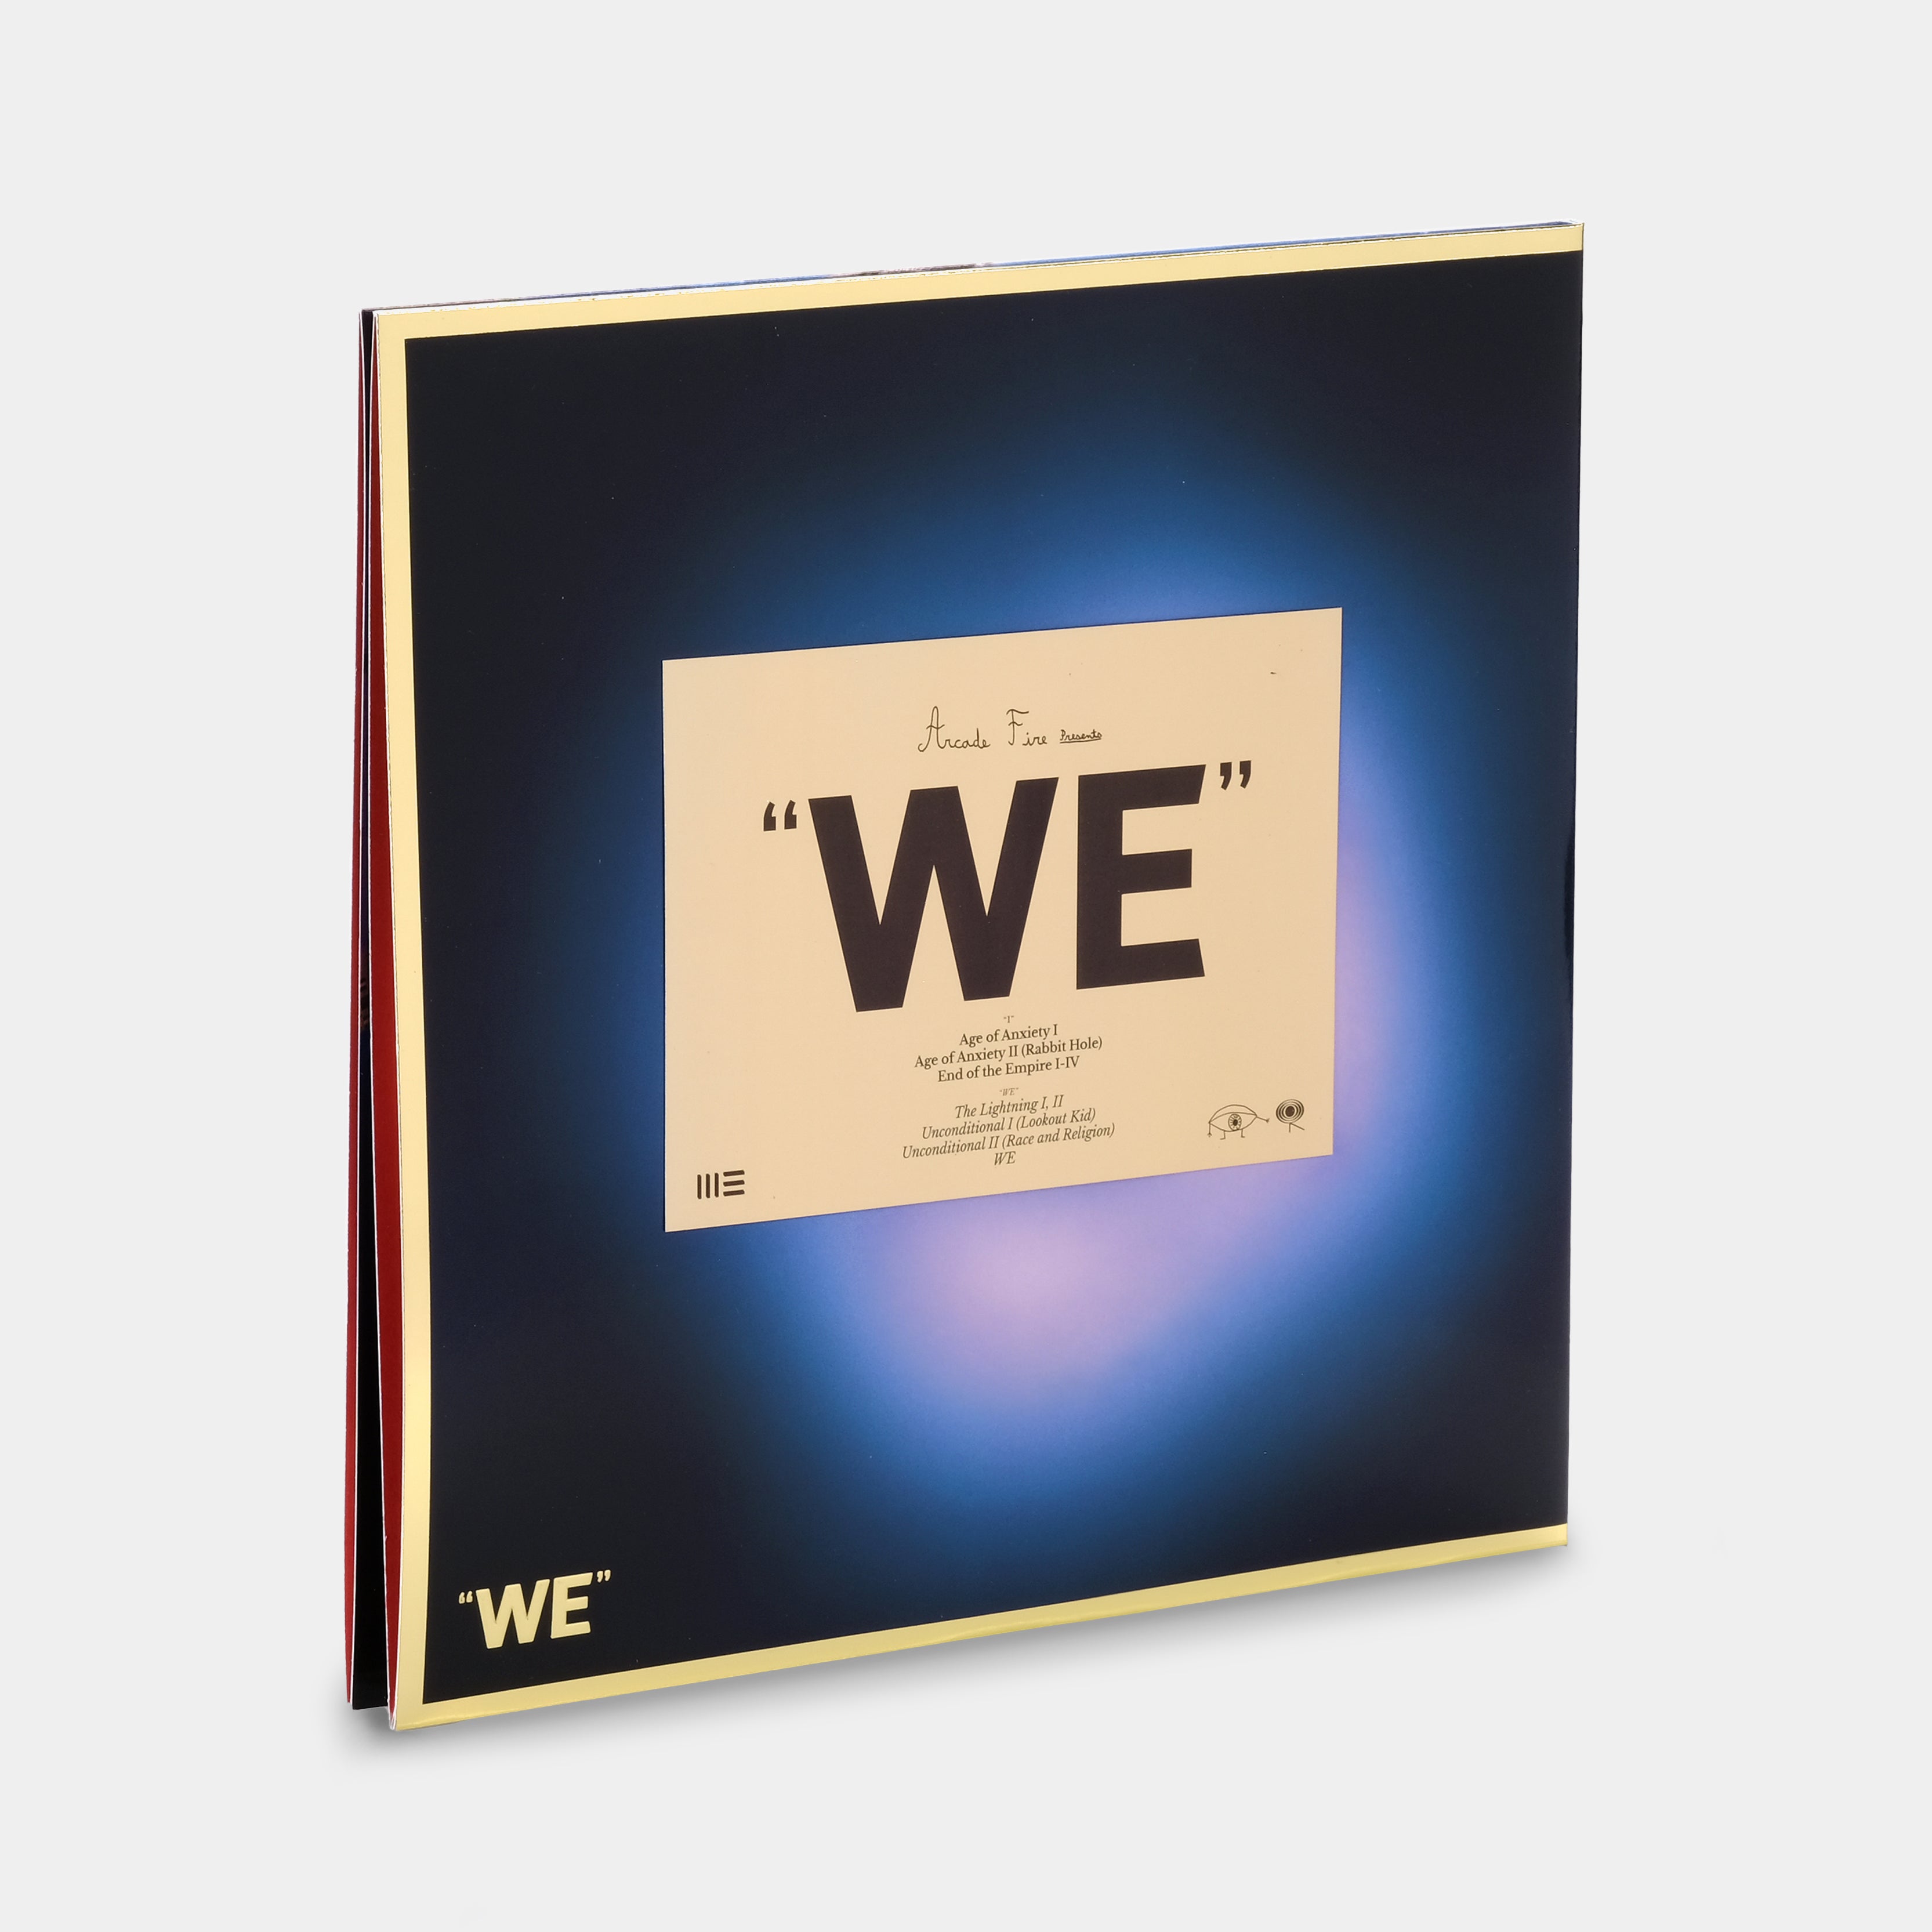 Arcade Fire - We LP White Vinyl Record